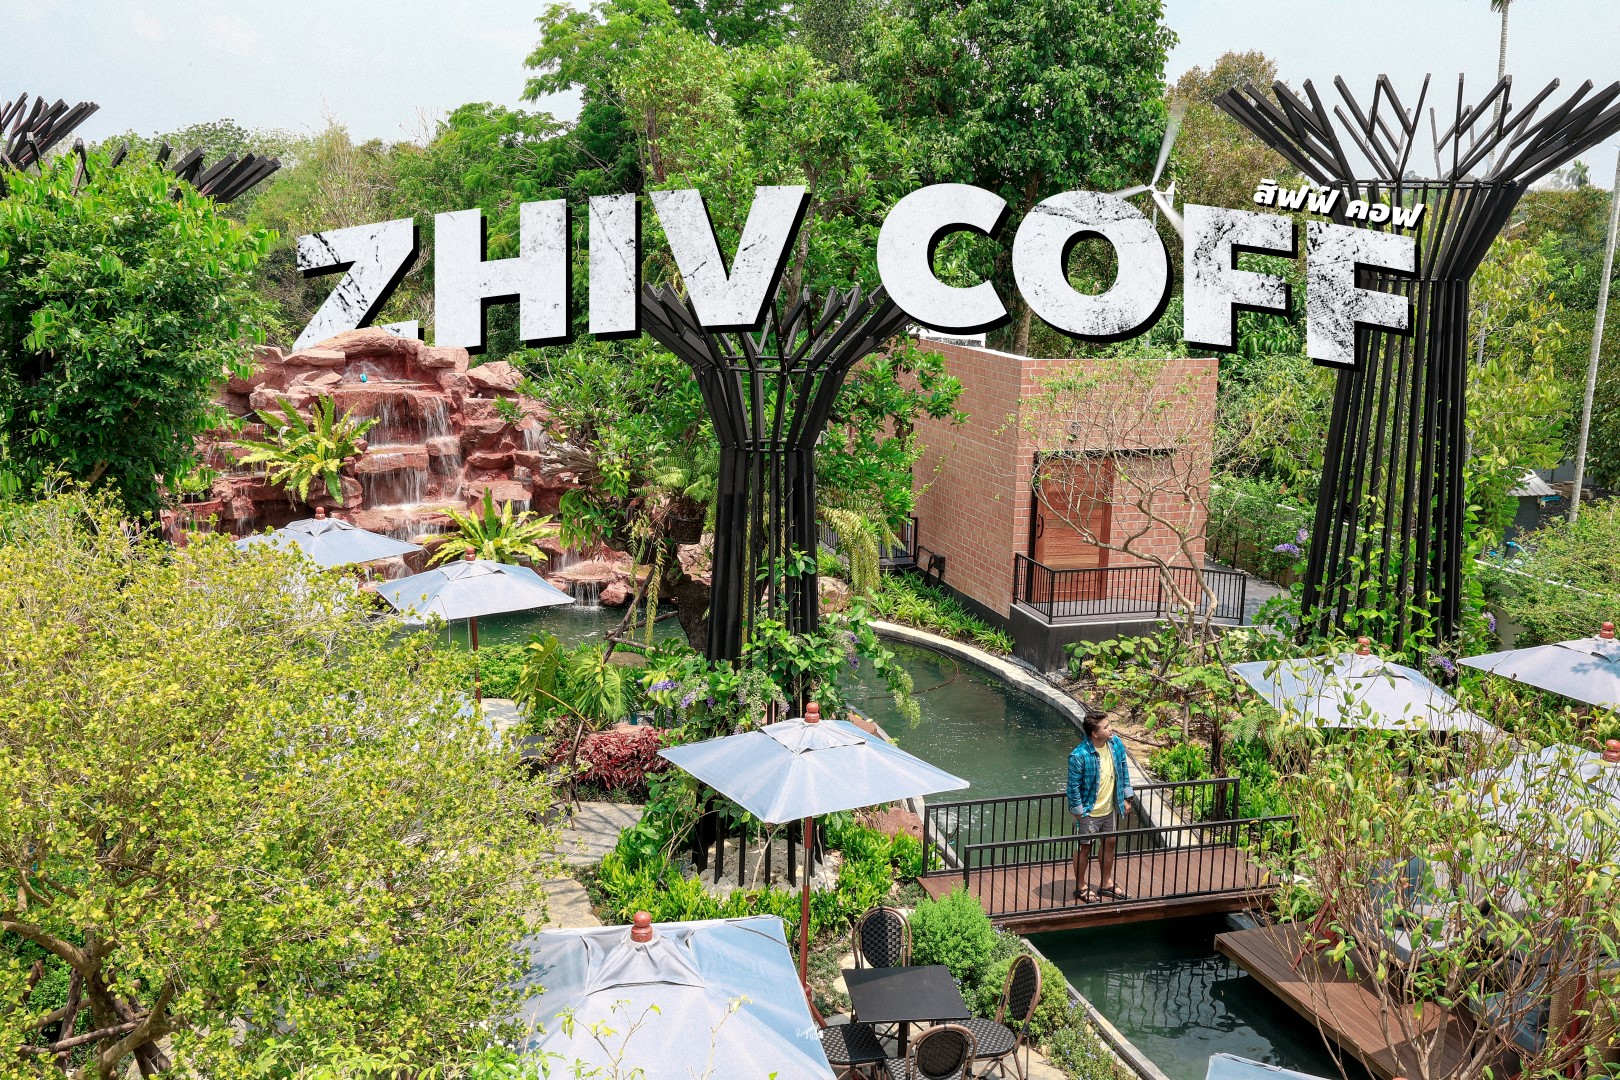 ZHIV COFF คาเฟ่ซ่อนเร้น เท่สวย แบบสับ แบบสิฟฟ์ ย่านบ้านแลง ขวากลิง